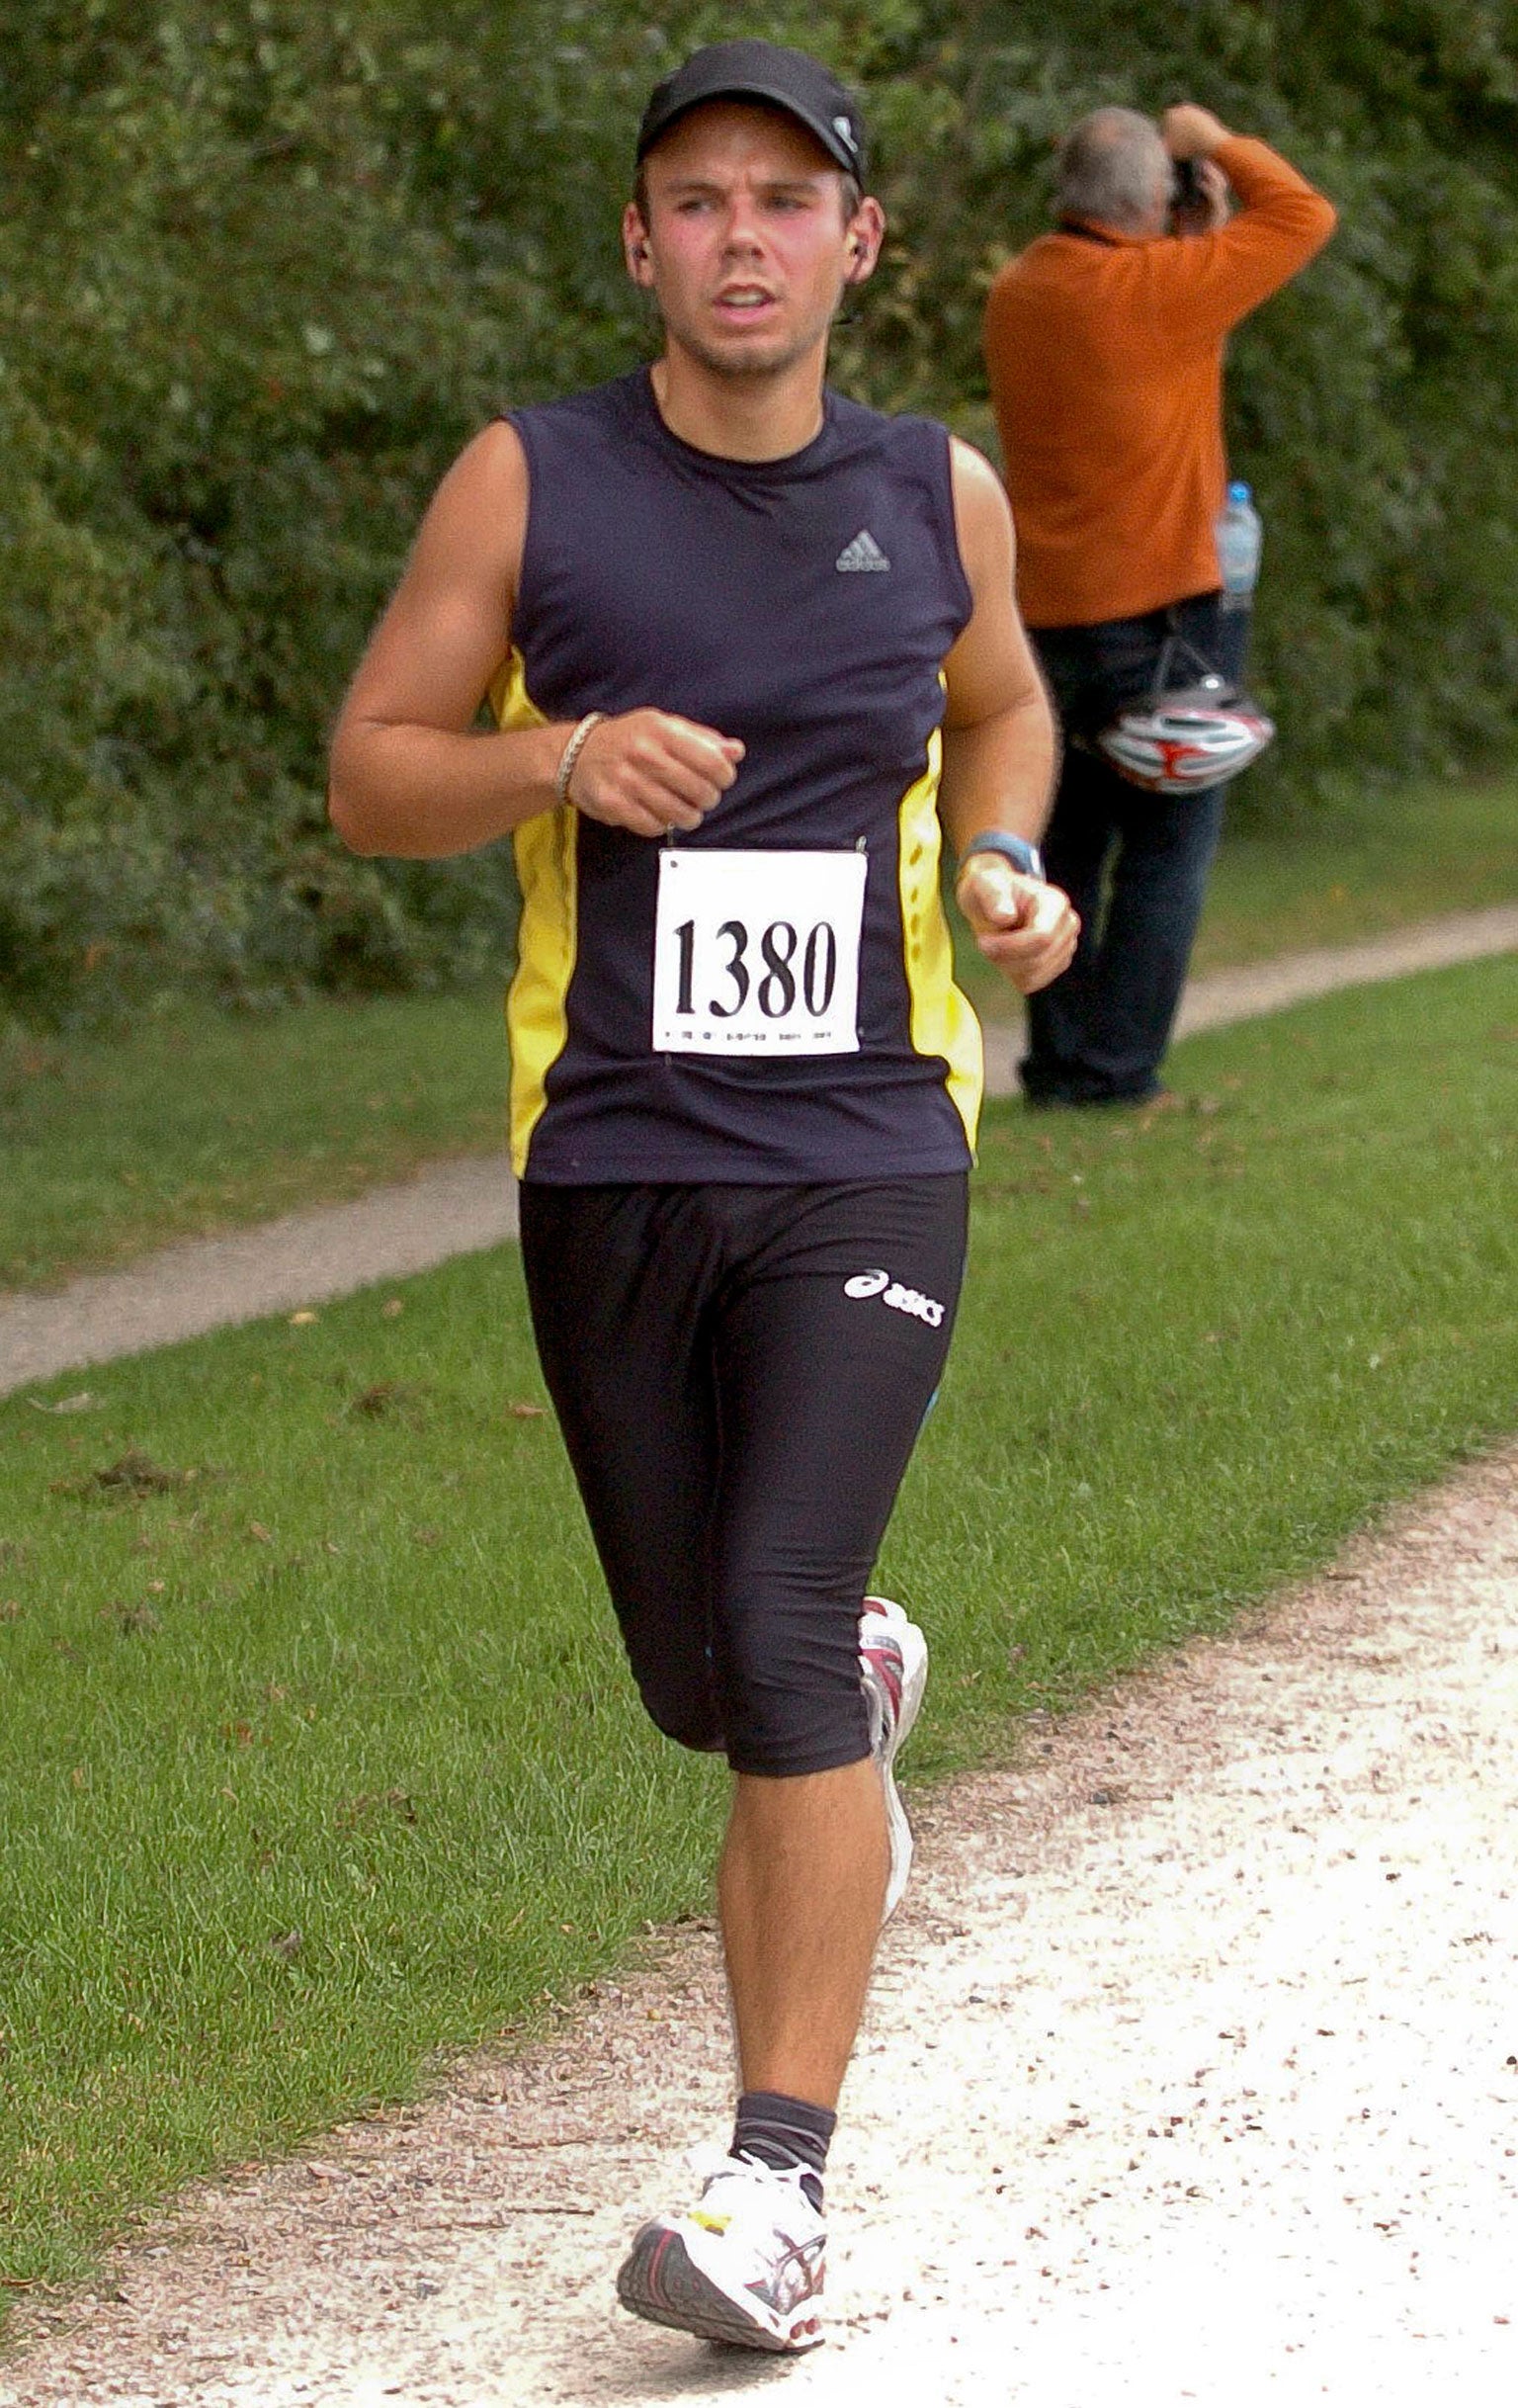 Andreas Lubitz runs the Airportrace half marathon in Hamburg on 13 September 2009